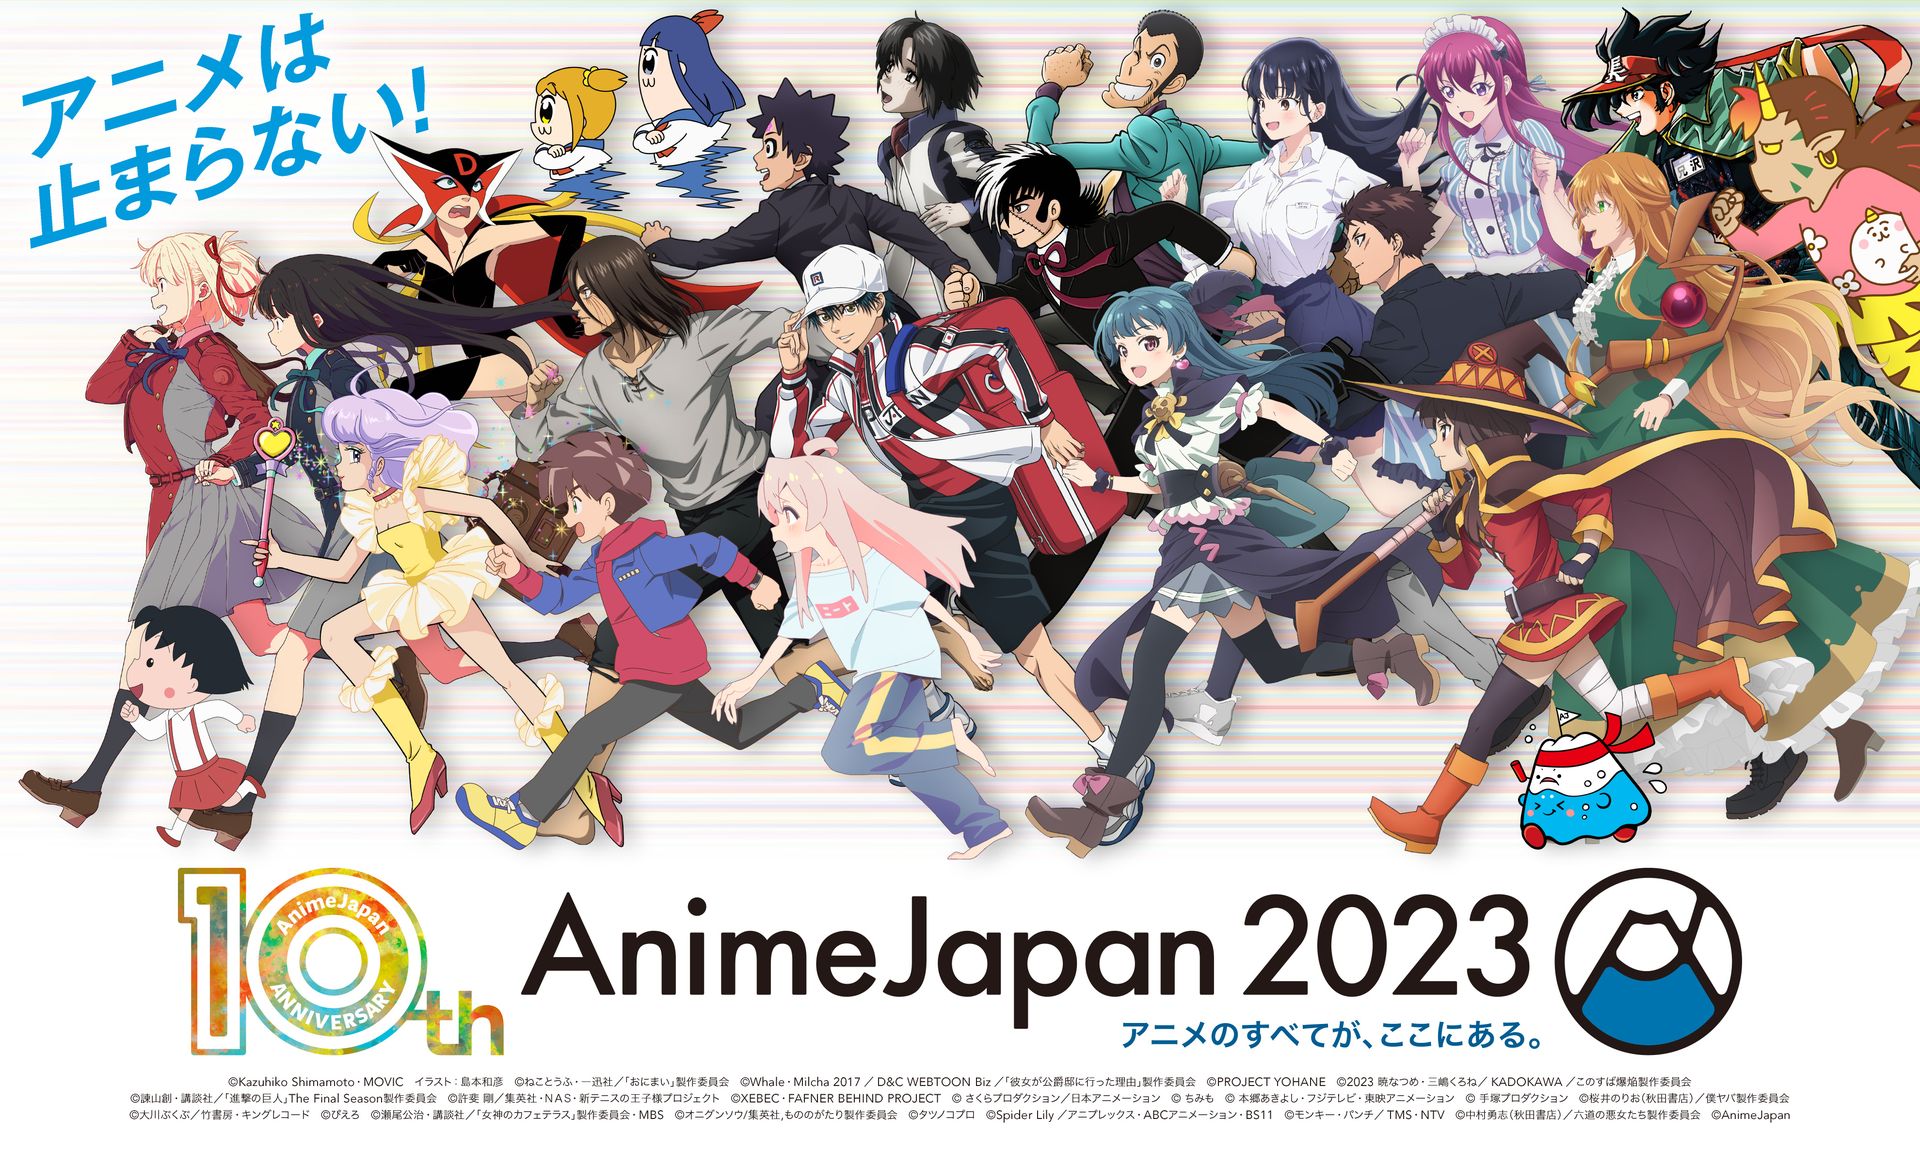 AnimeJapan 2023」AJステージ全46プログラムの作品タイトルや出演者